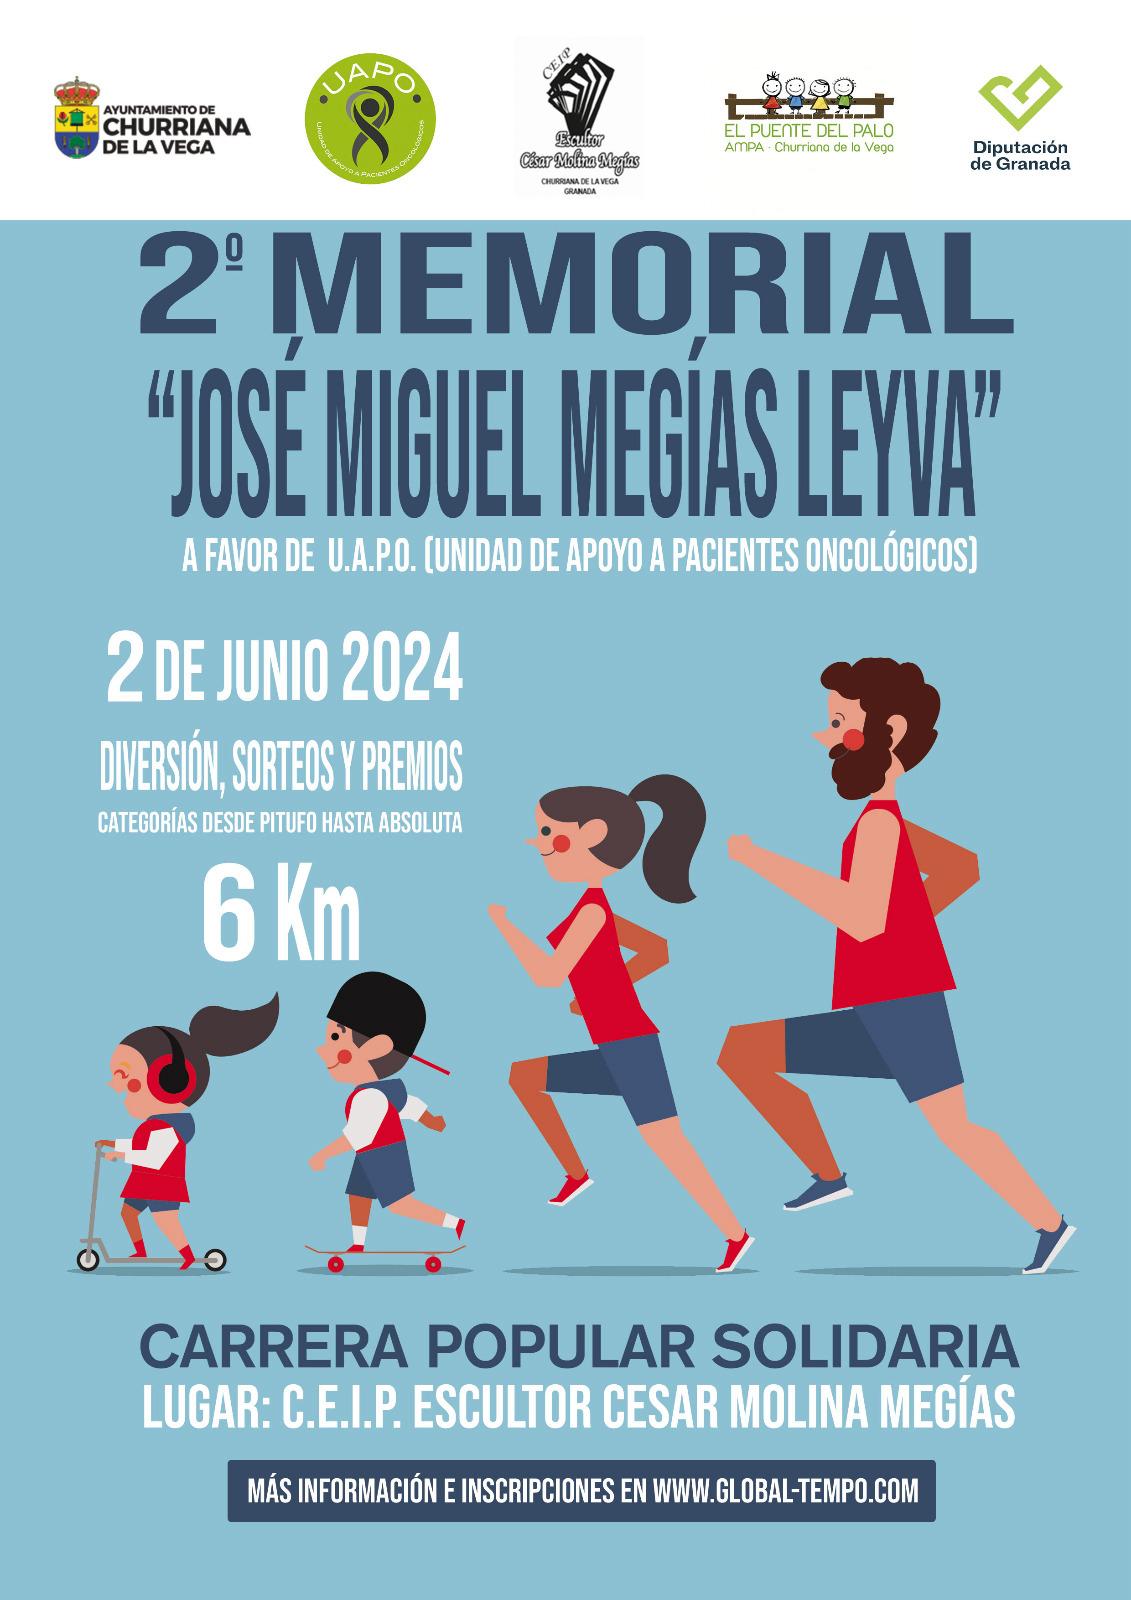 II MEMORIAL "JOSE MIGUEL MEGAS LEYVA"